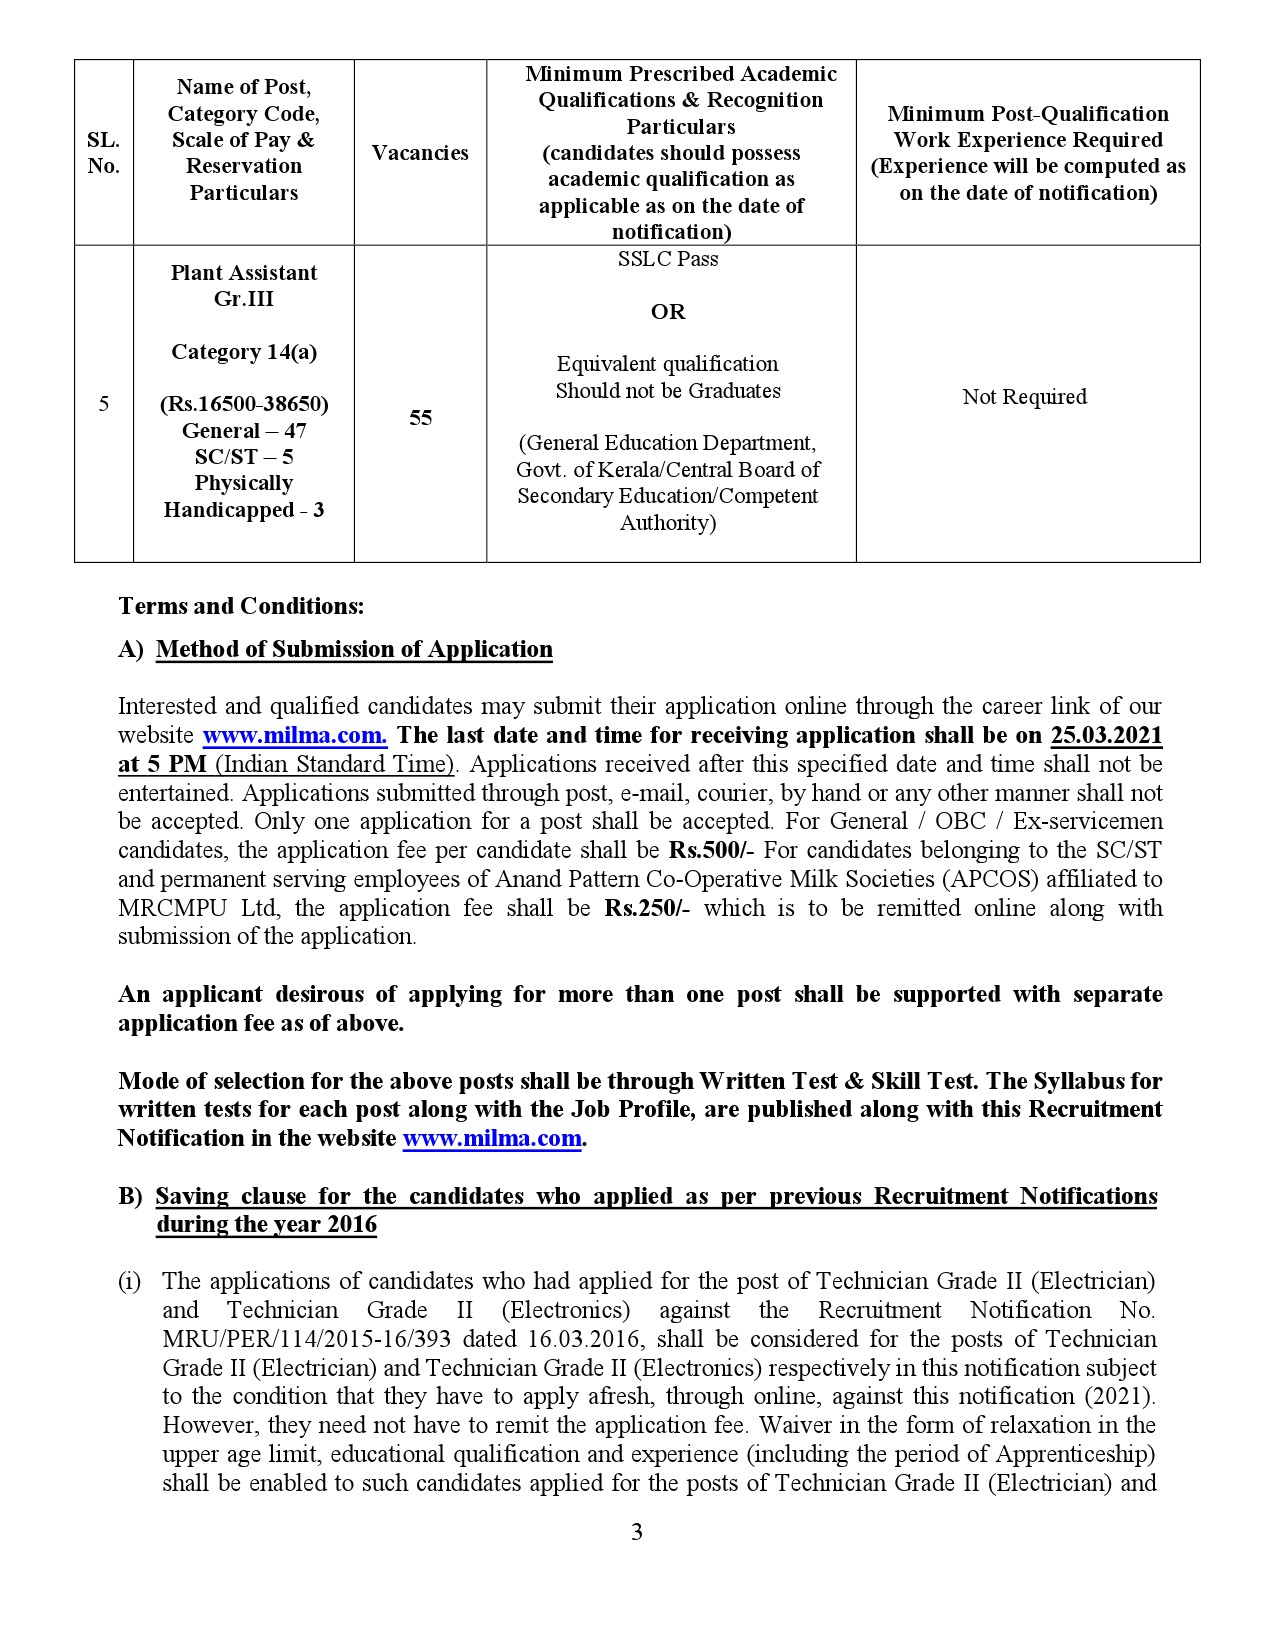 Milma Recruitment Notification March 2021 - Notification Image 4